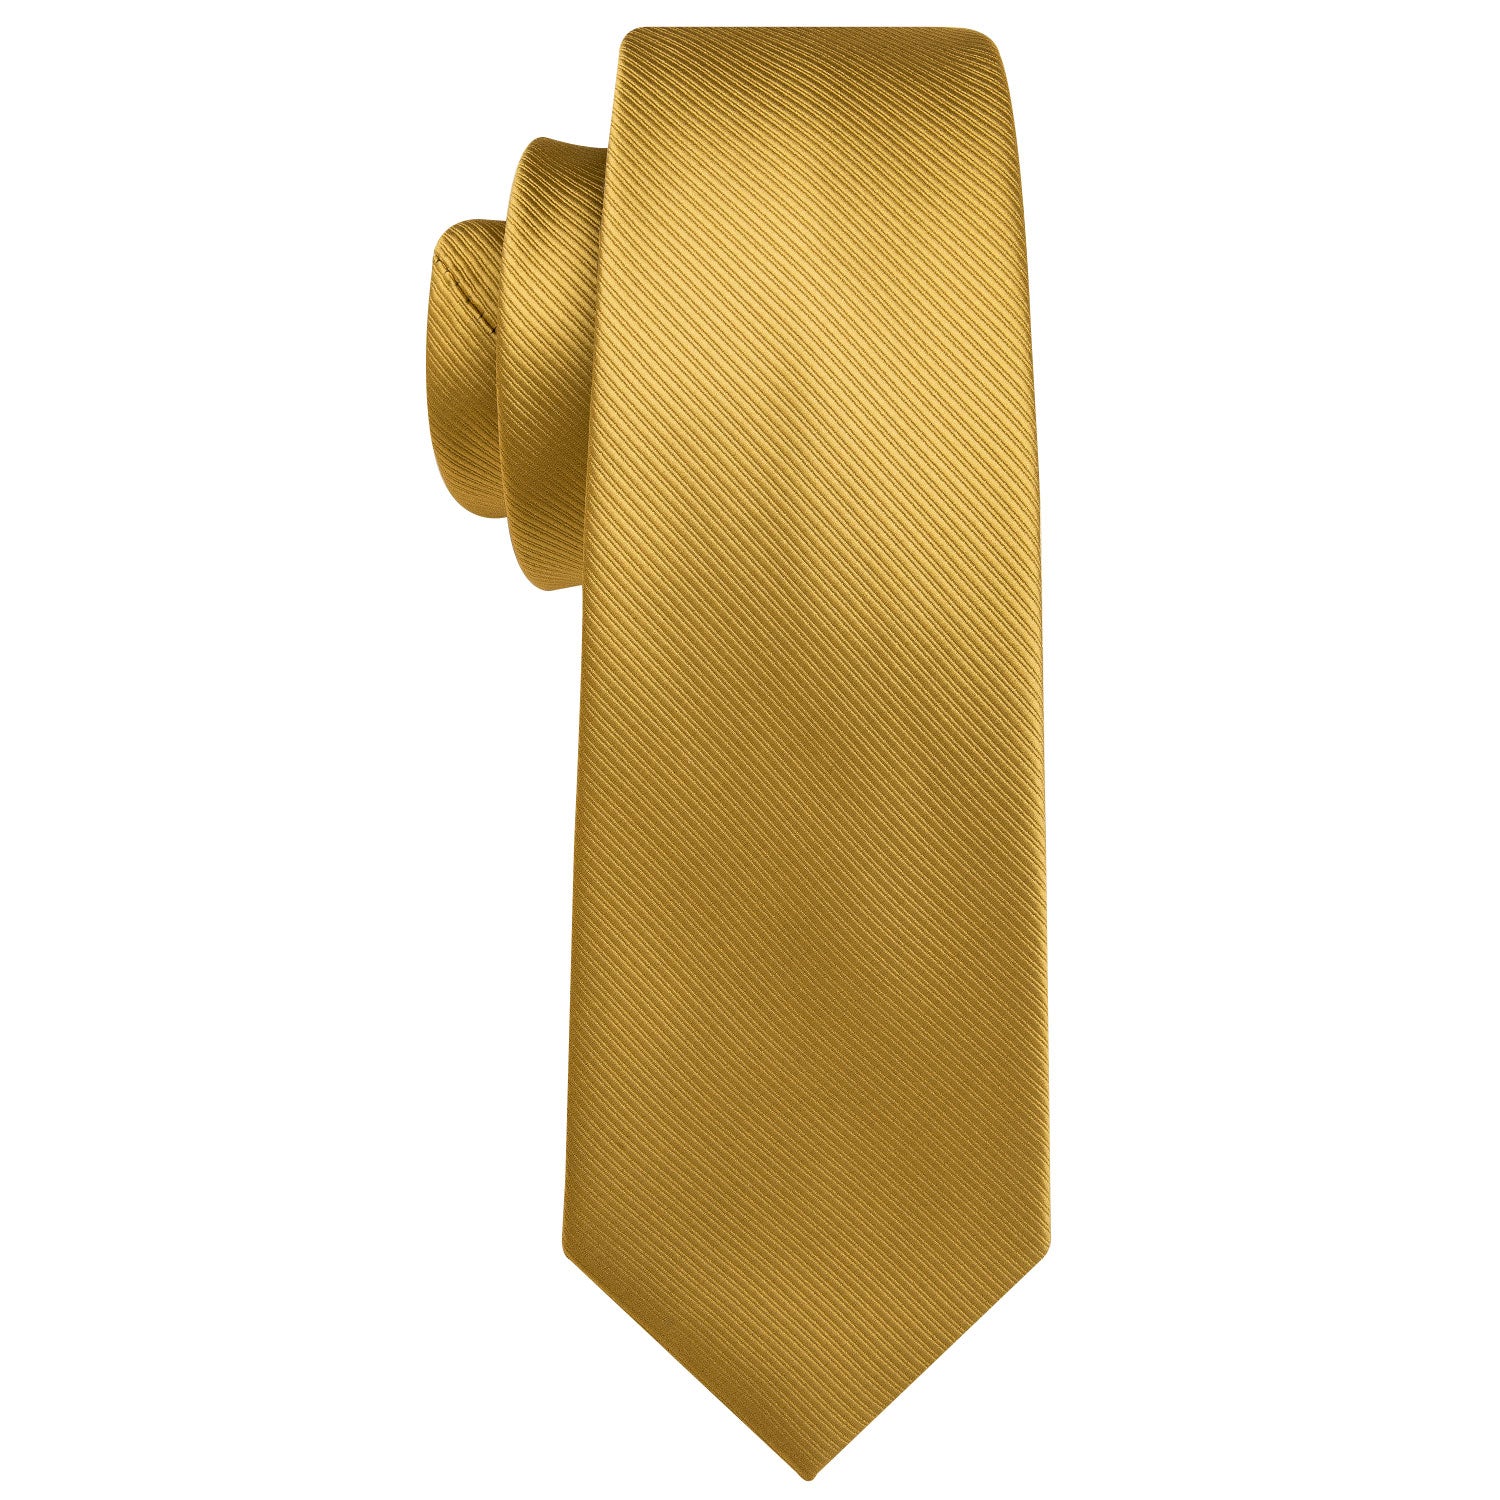 Barry.wang Gold Tie Striped Silk Men's Tie Pocket Square Cufflinks Set